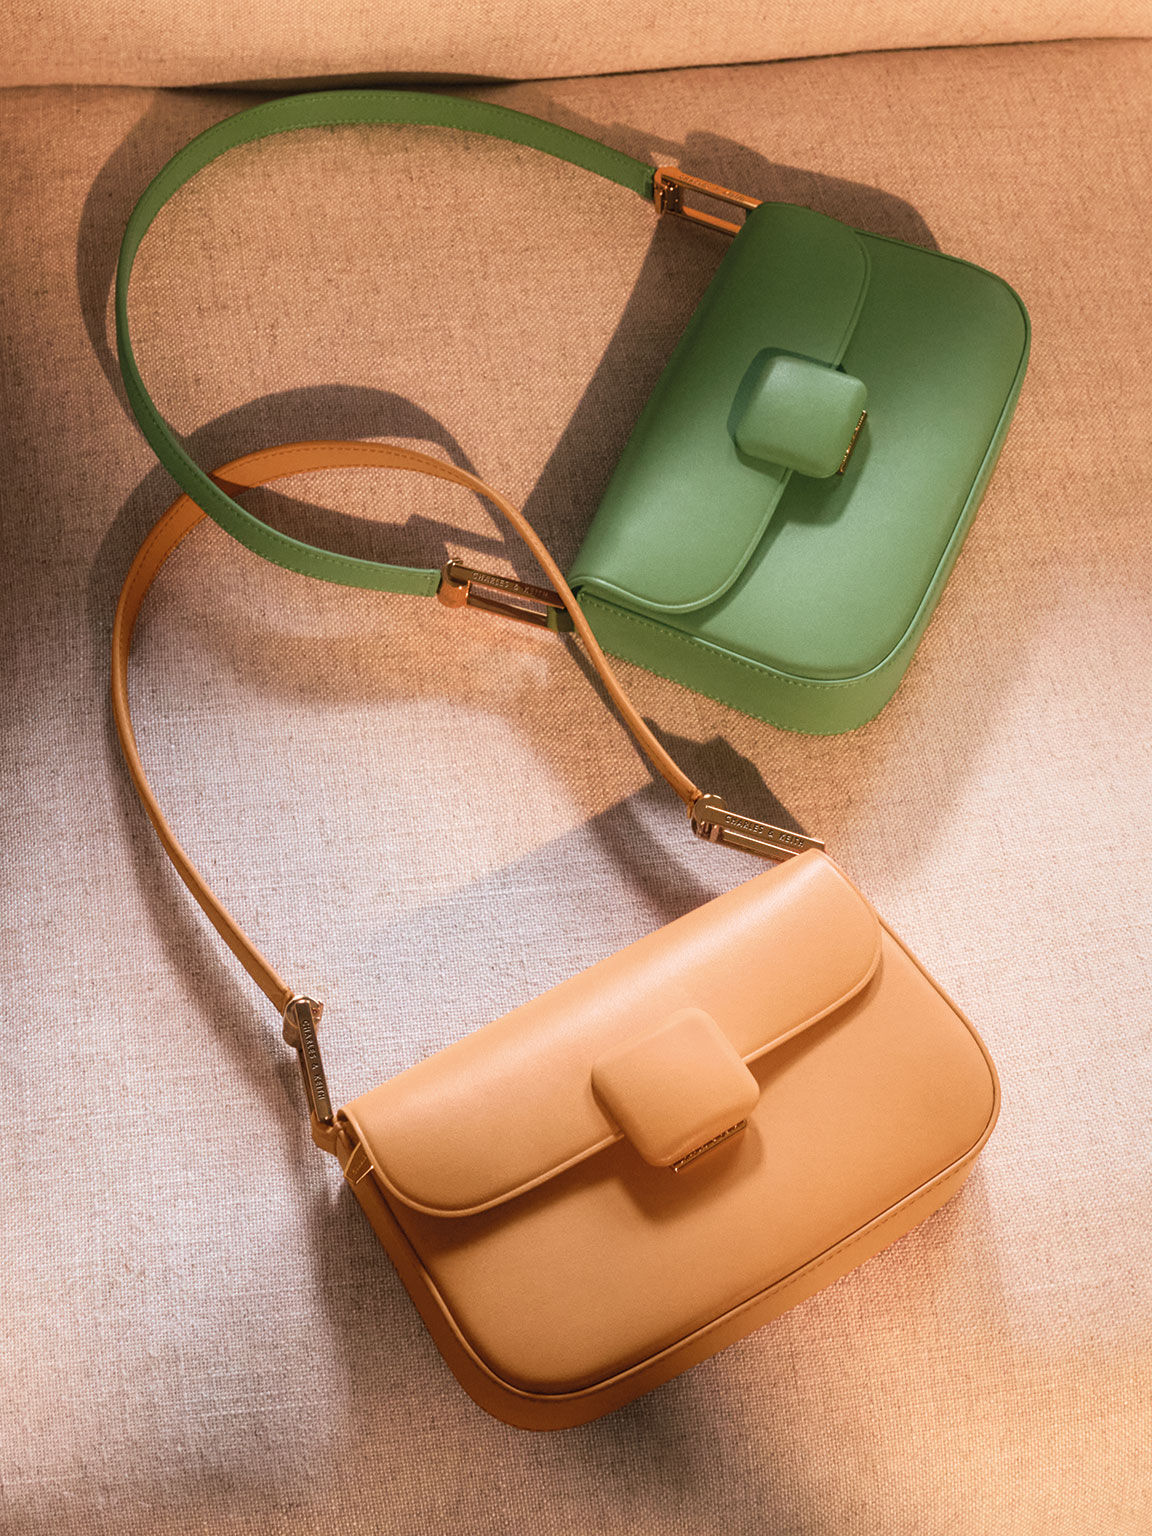 Koa Square Push-Lock Shoulder Bag, Orange, hi-res